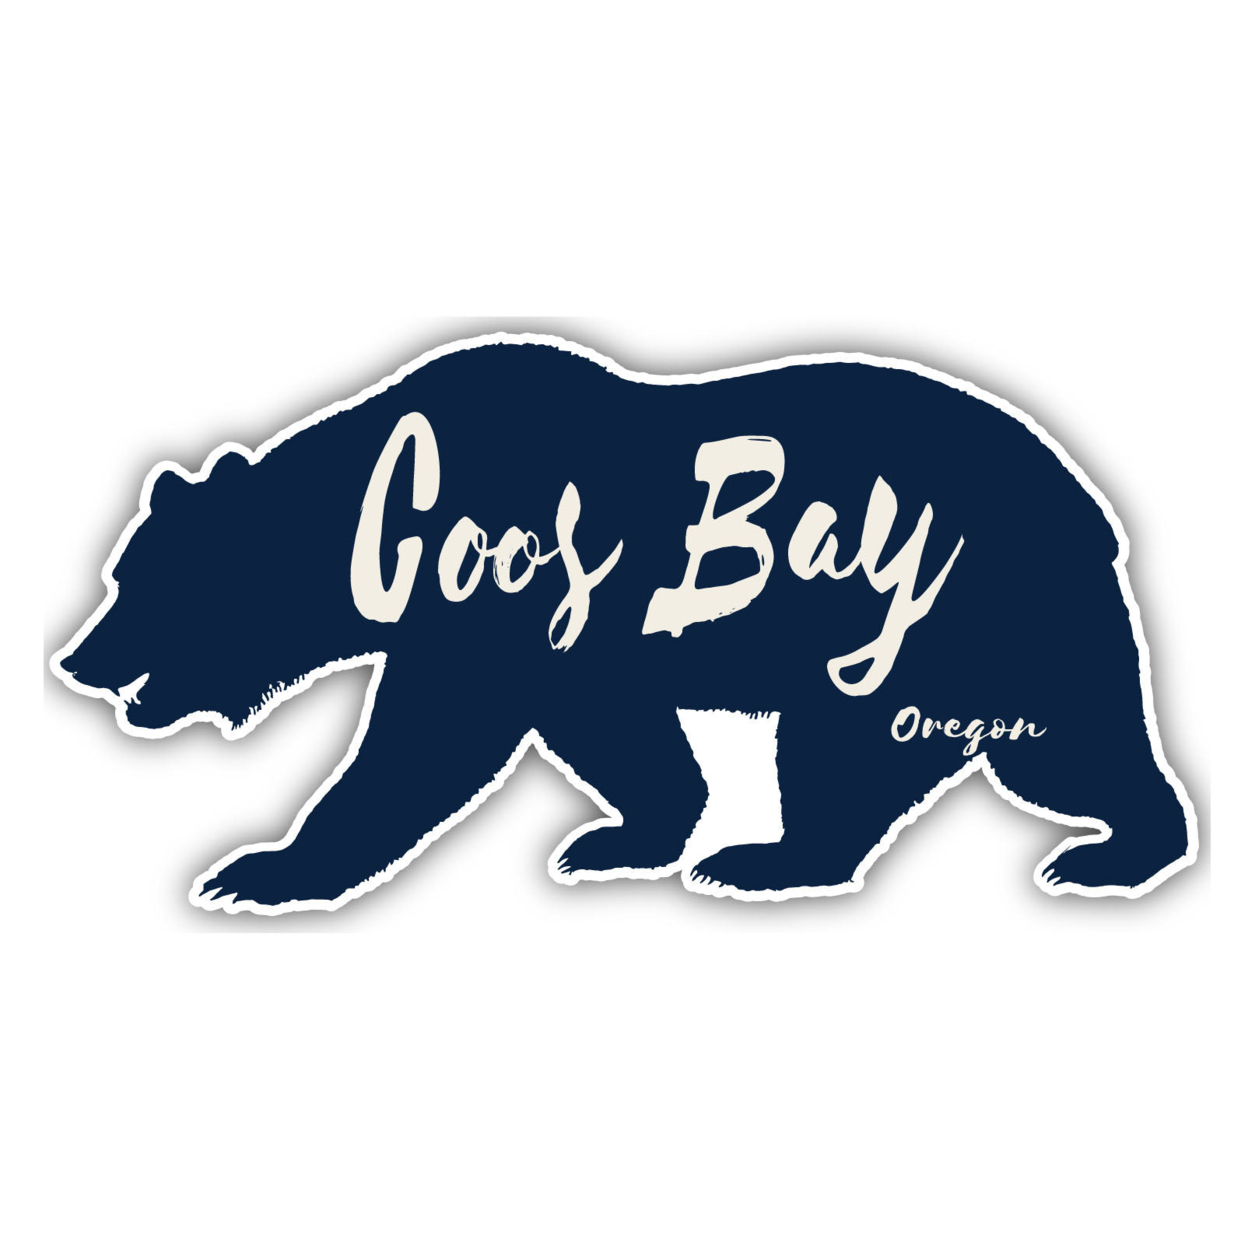 Coos Bay Oregon Souvenir Decorative Stickers (Choose Theme And Size) - Single Unit, 10-Inch, Adventures Awaits